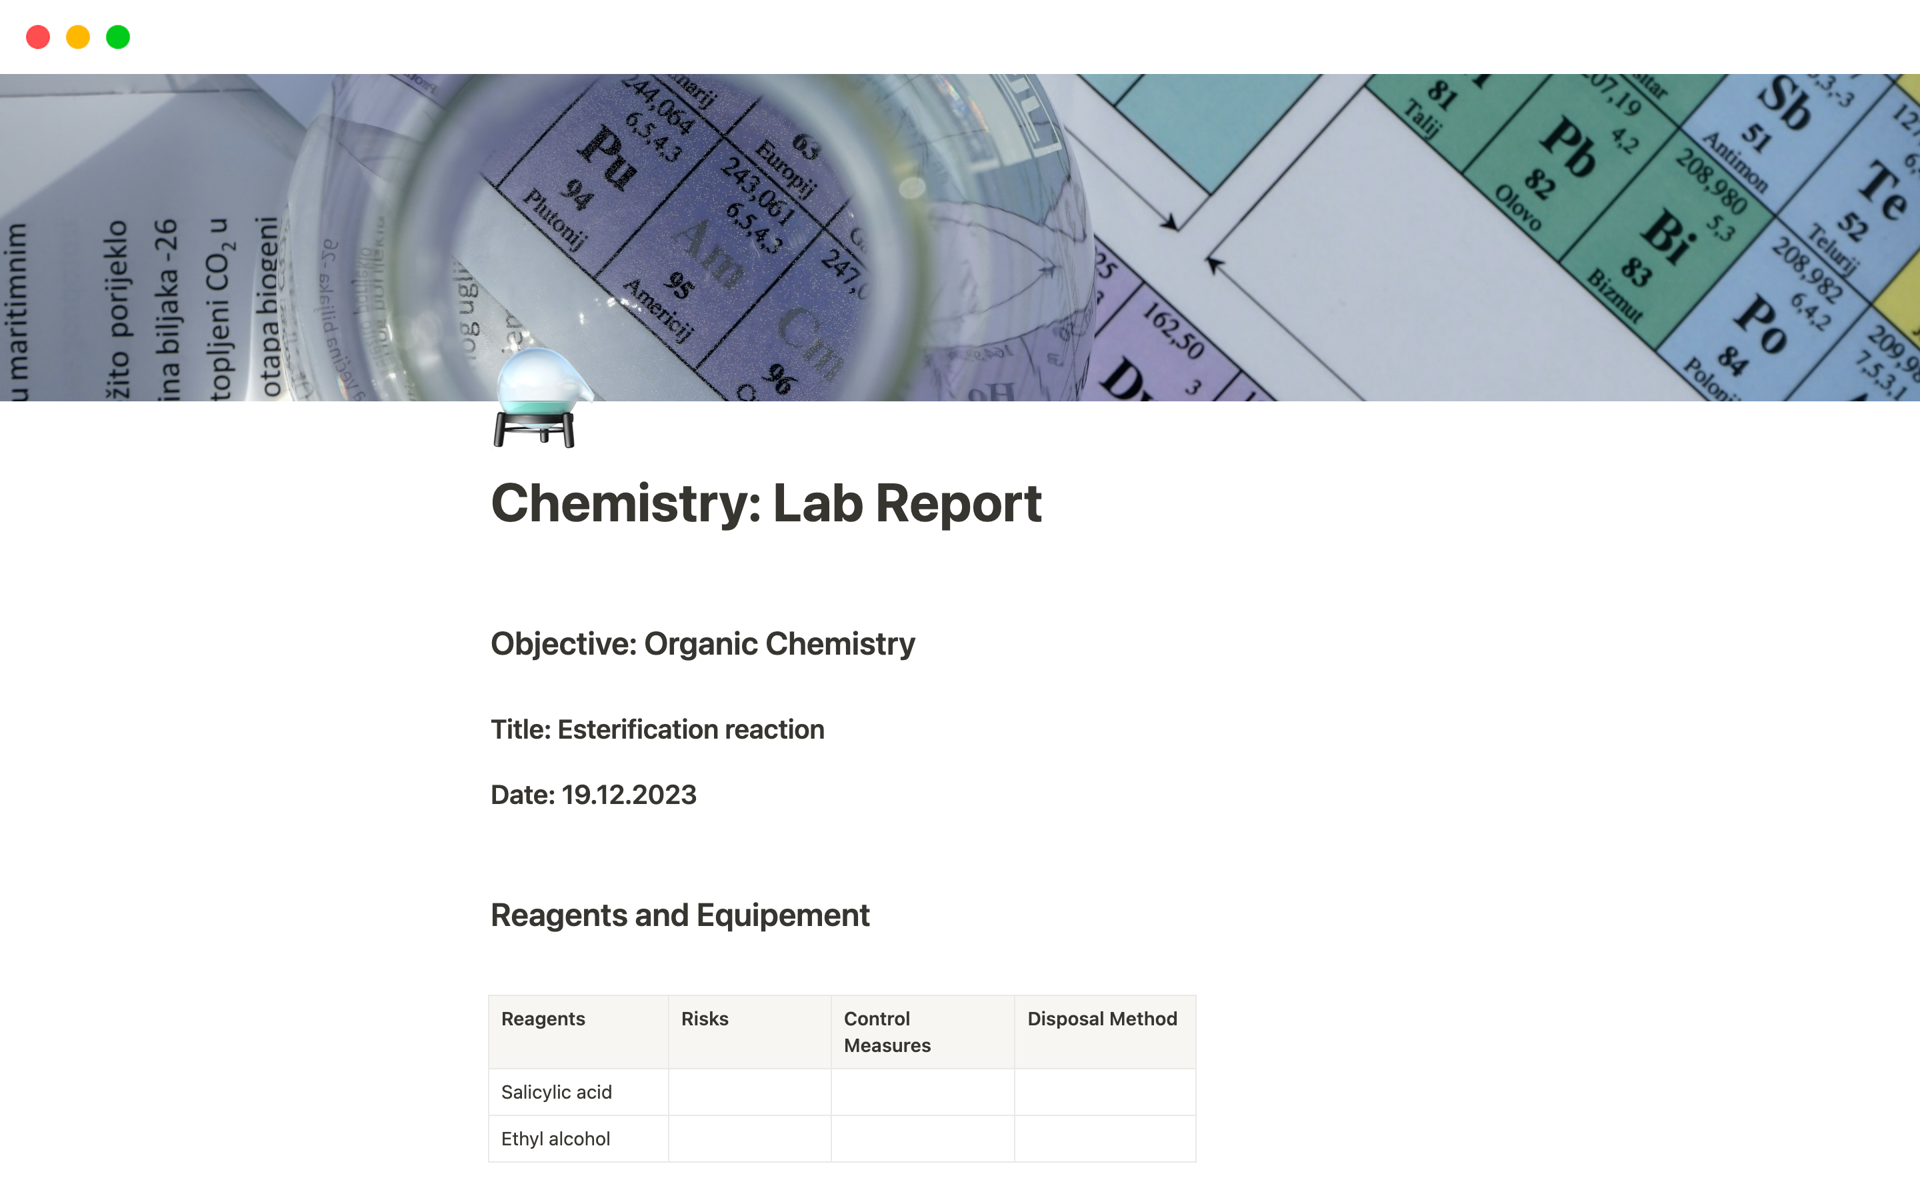 Vista previa de plantilla para Chemistry Lab Report